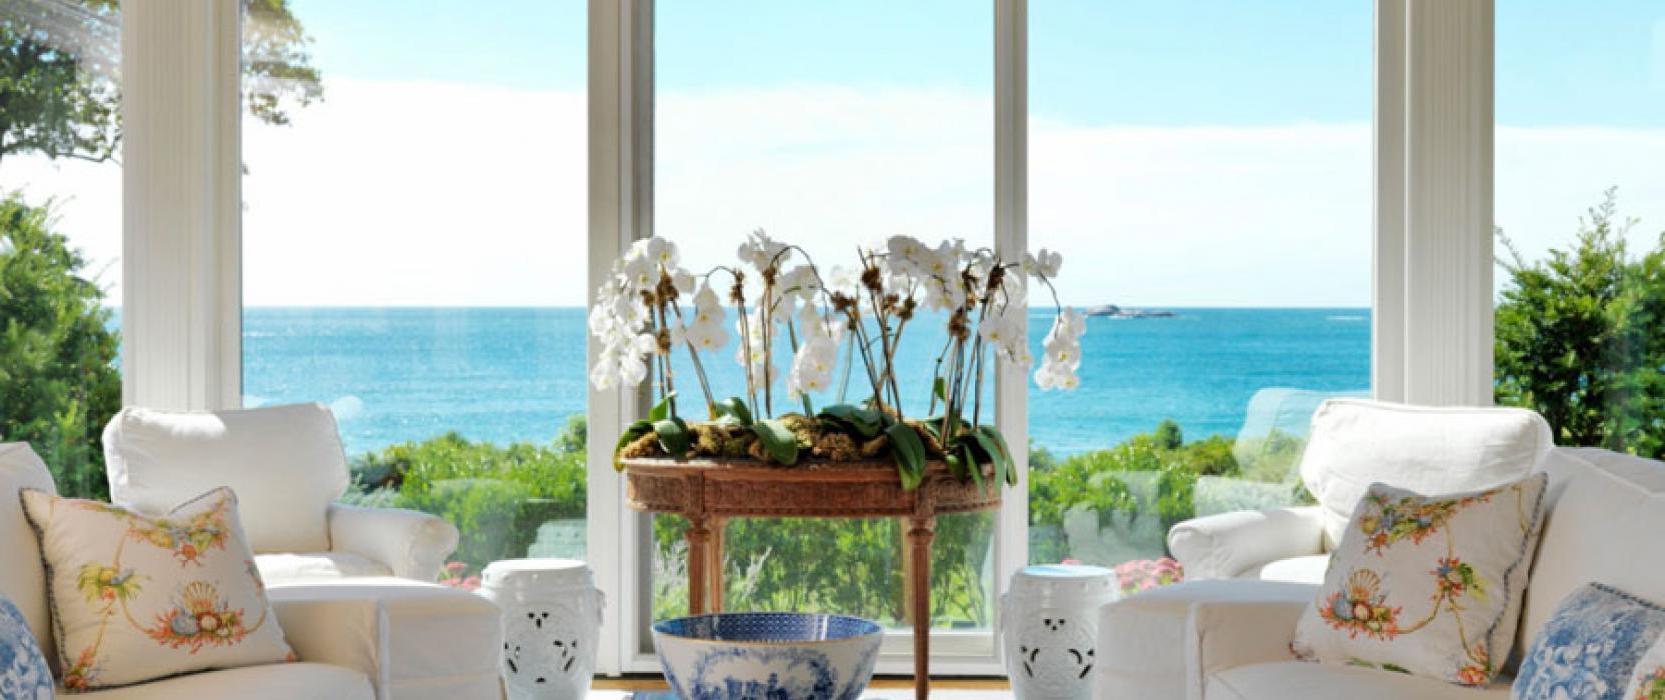 Wilson Kelsey Design被Ocean Home评为50位最佳沿海室内设计师之一